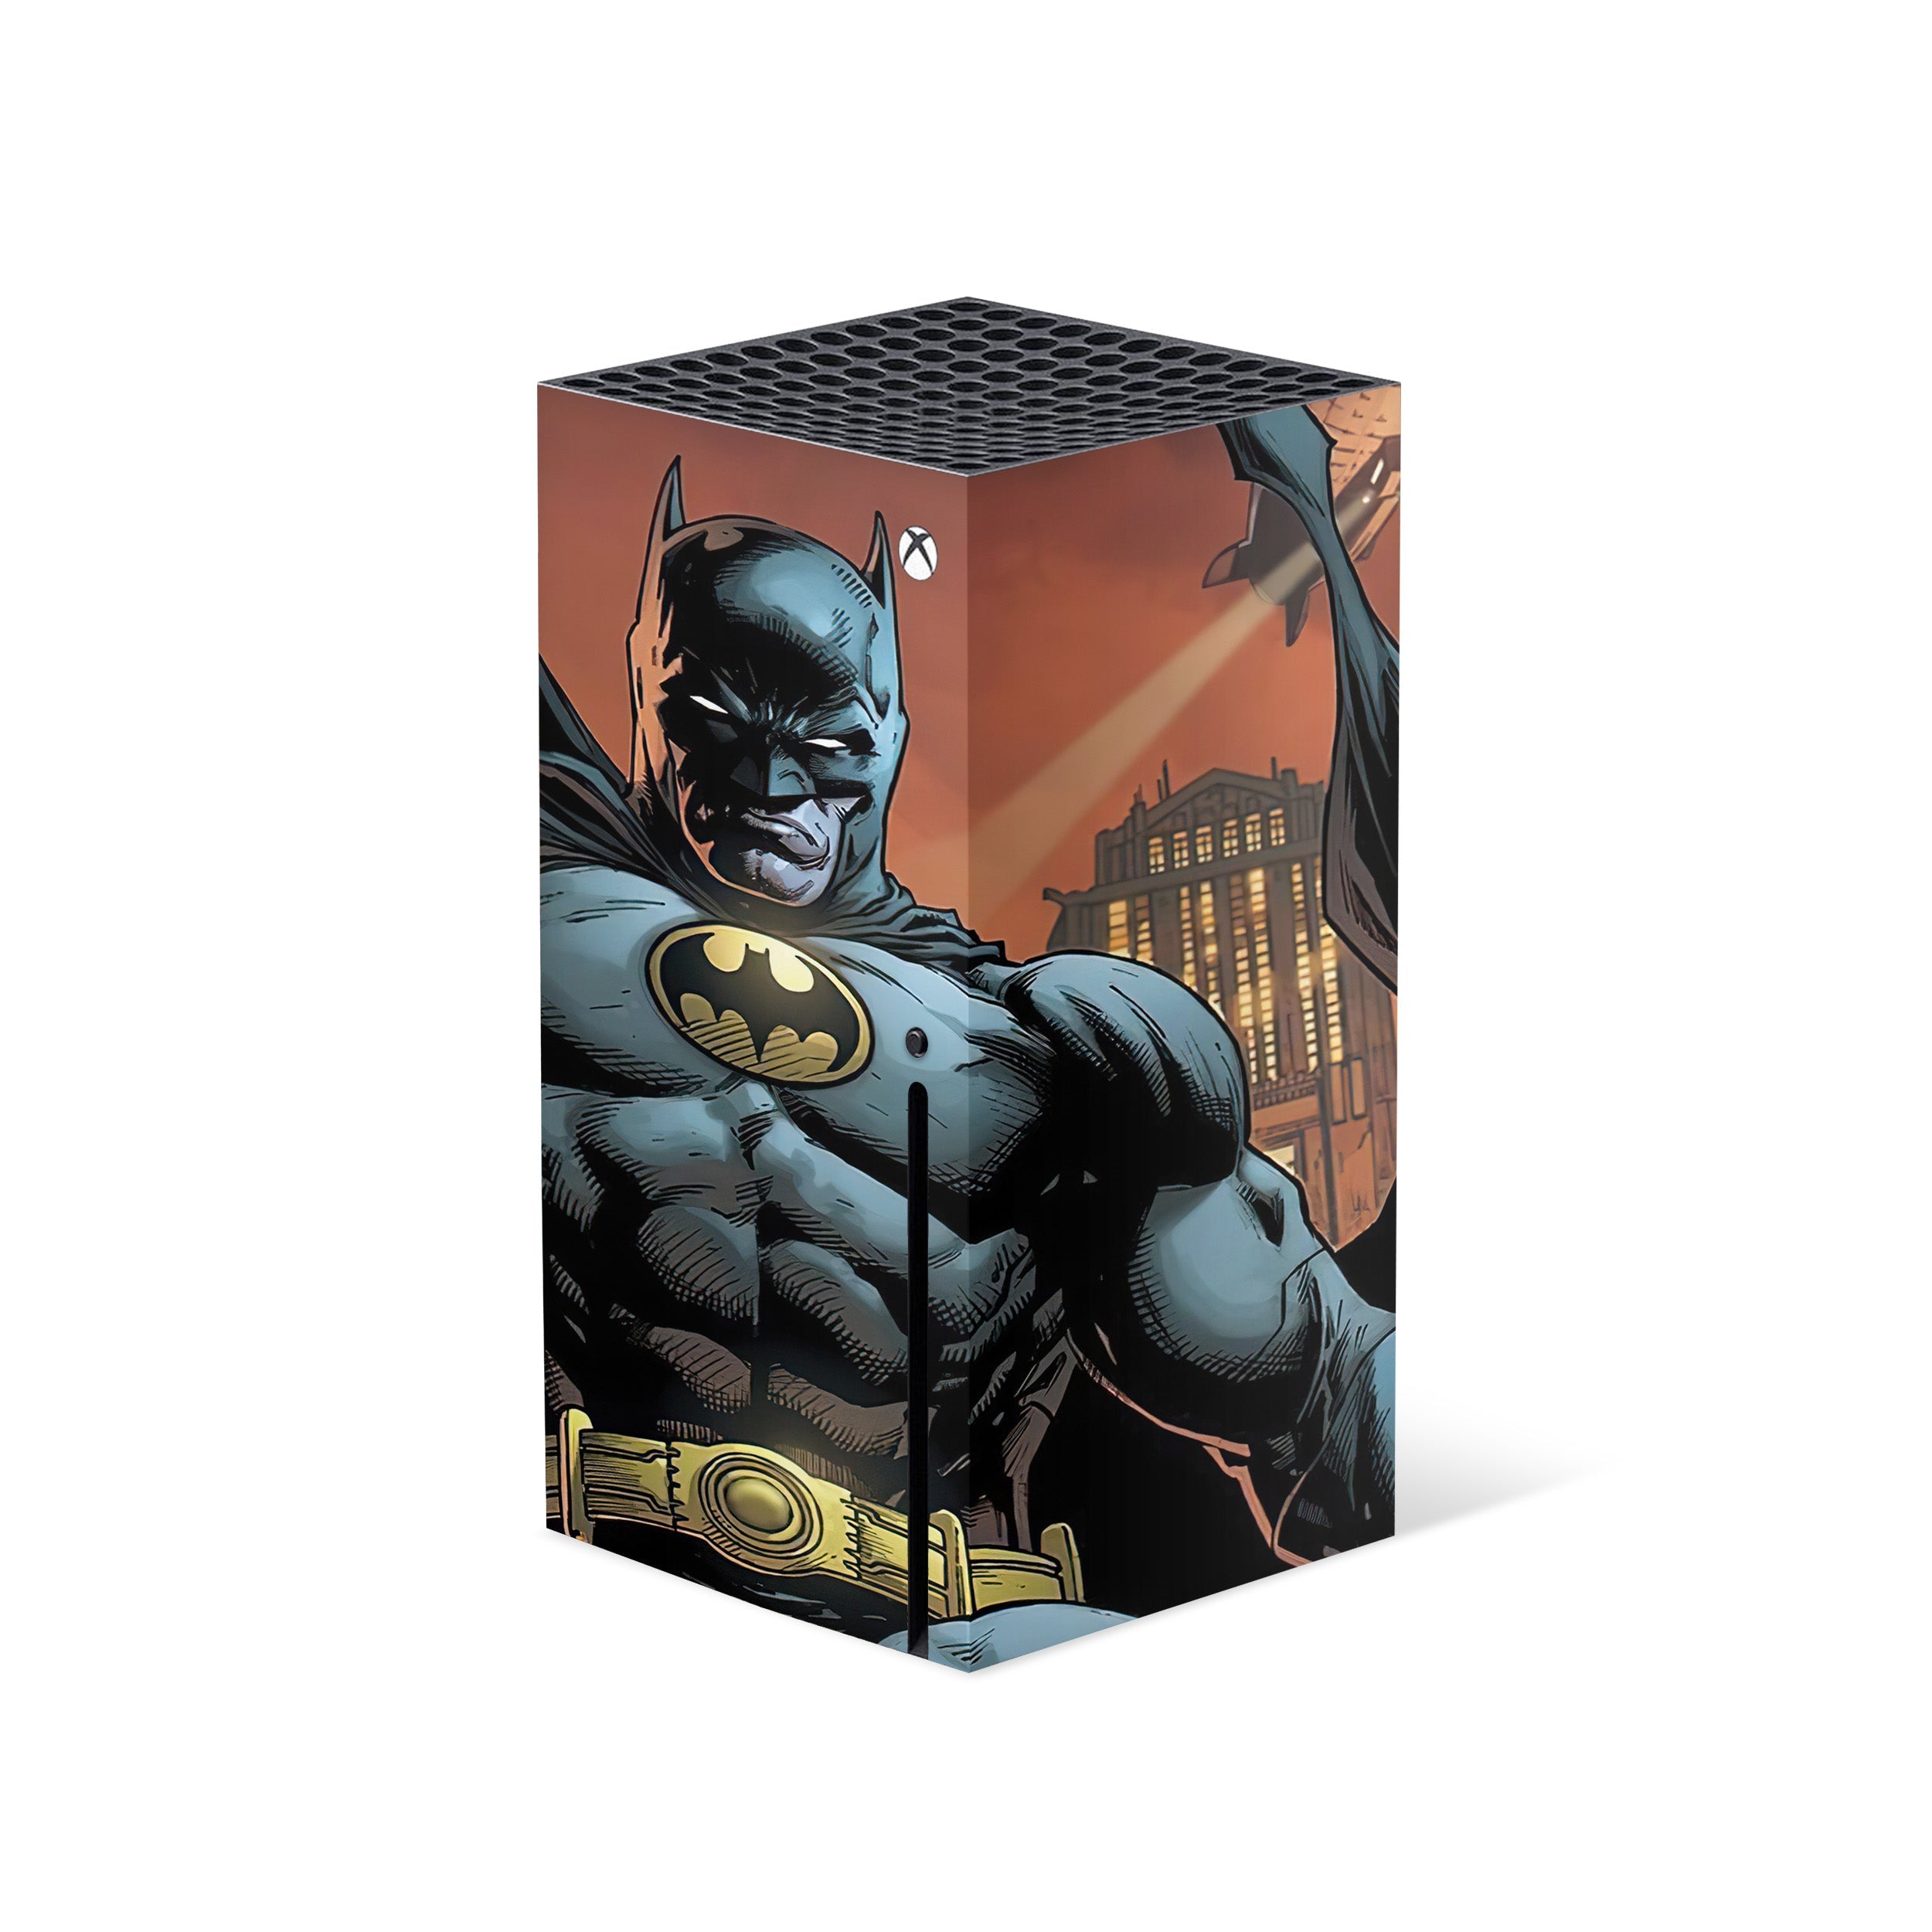 A video game skin featuring a DC Comics Batman design for the Xbox Series X.